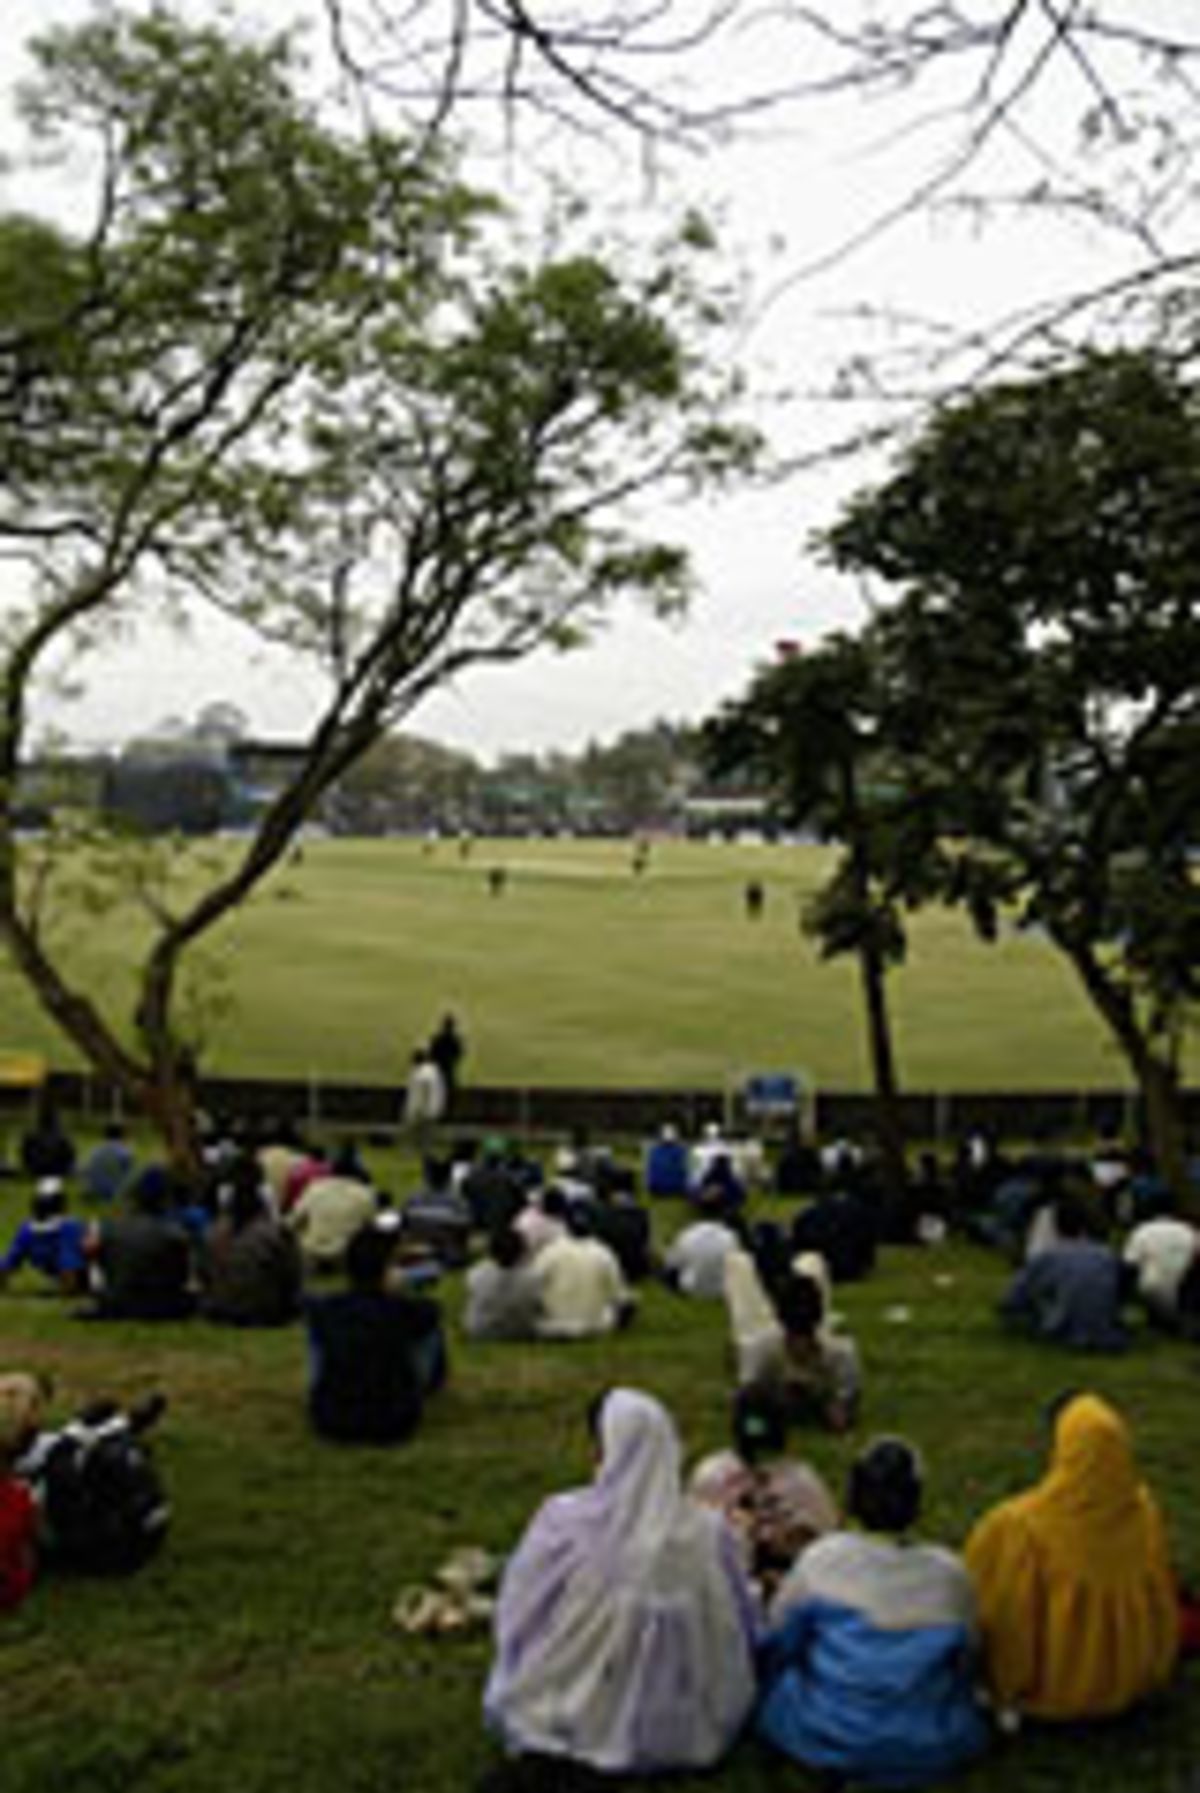 General view of the Nairobi Gymkhana ground, 2002